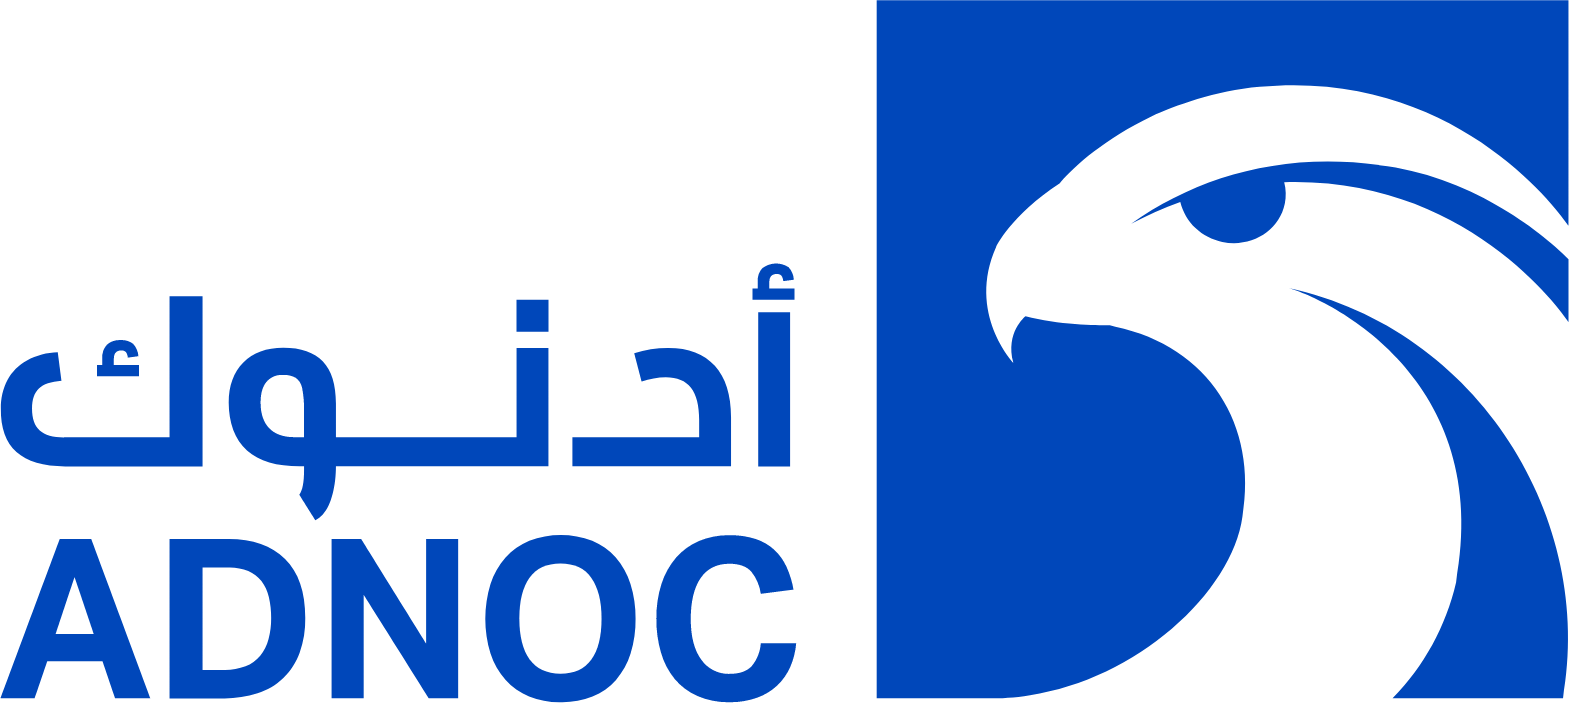 ADNOC Drilling Company logo large (transparent PNG)